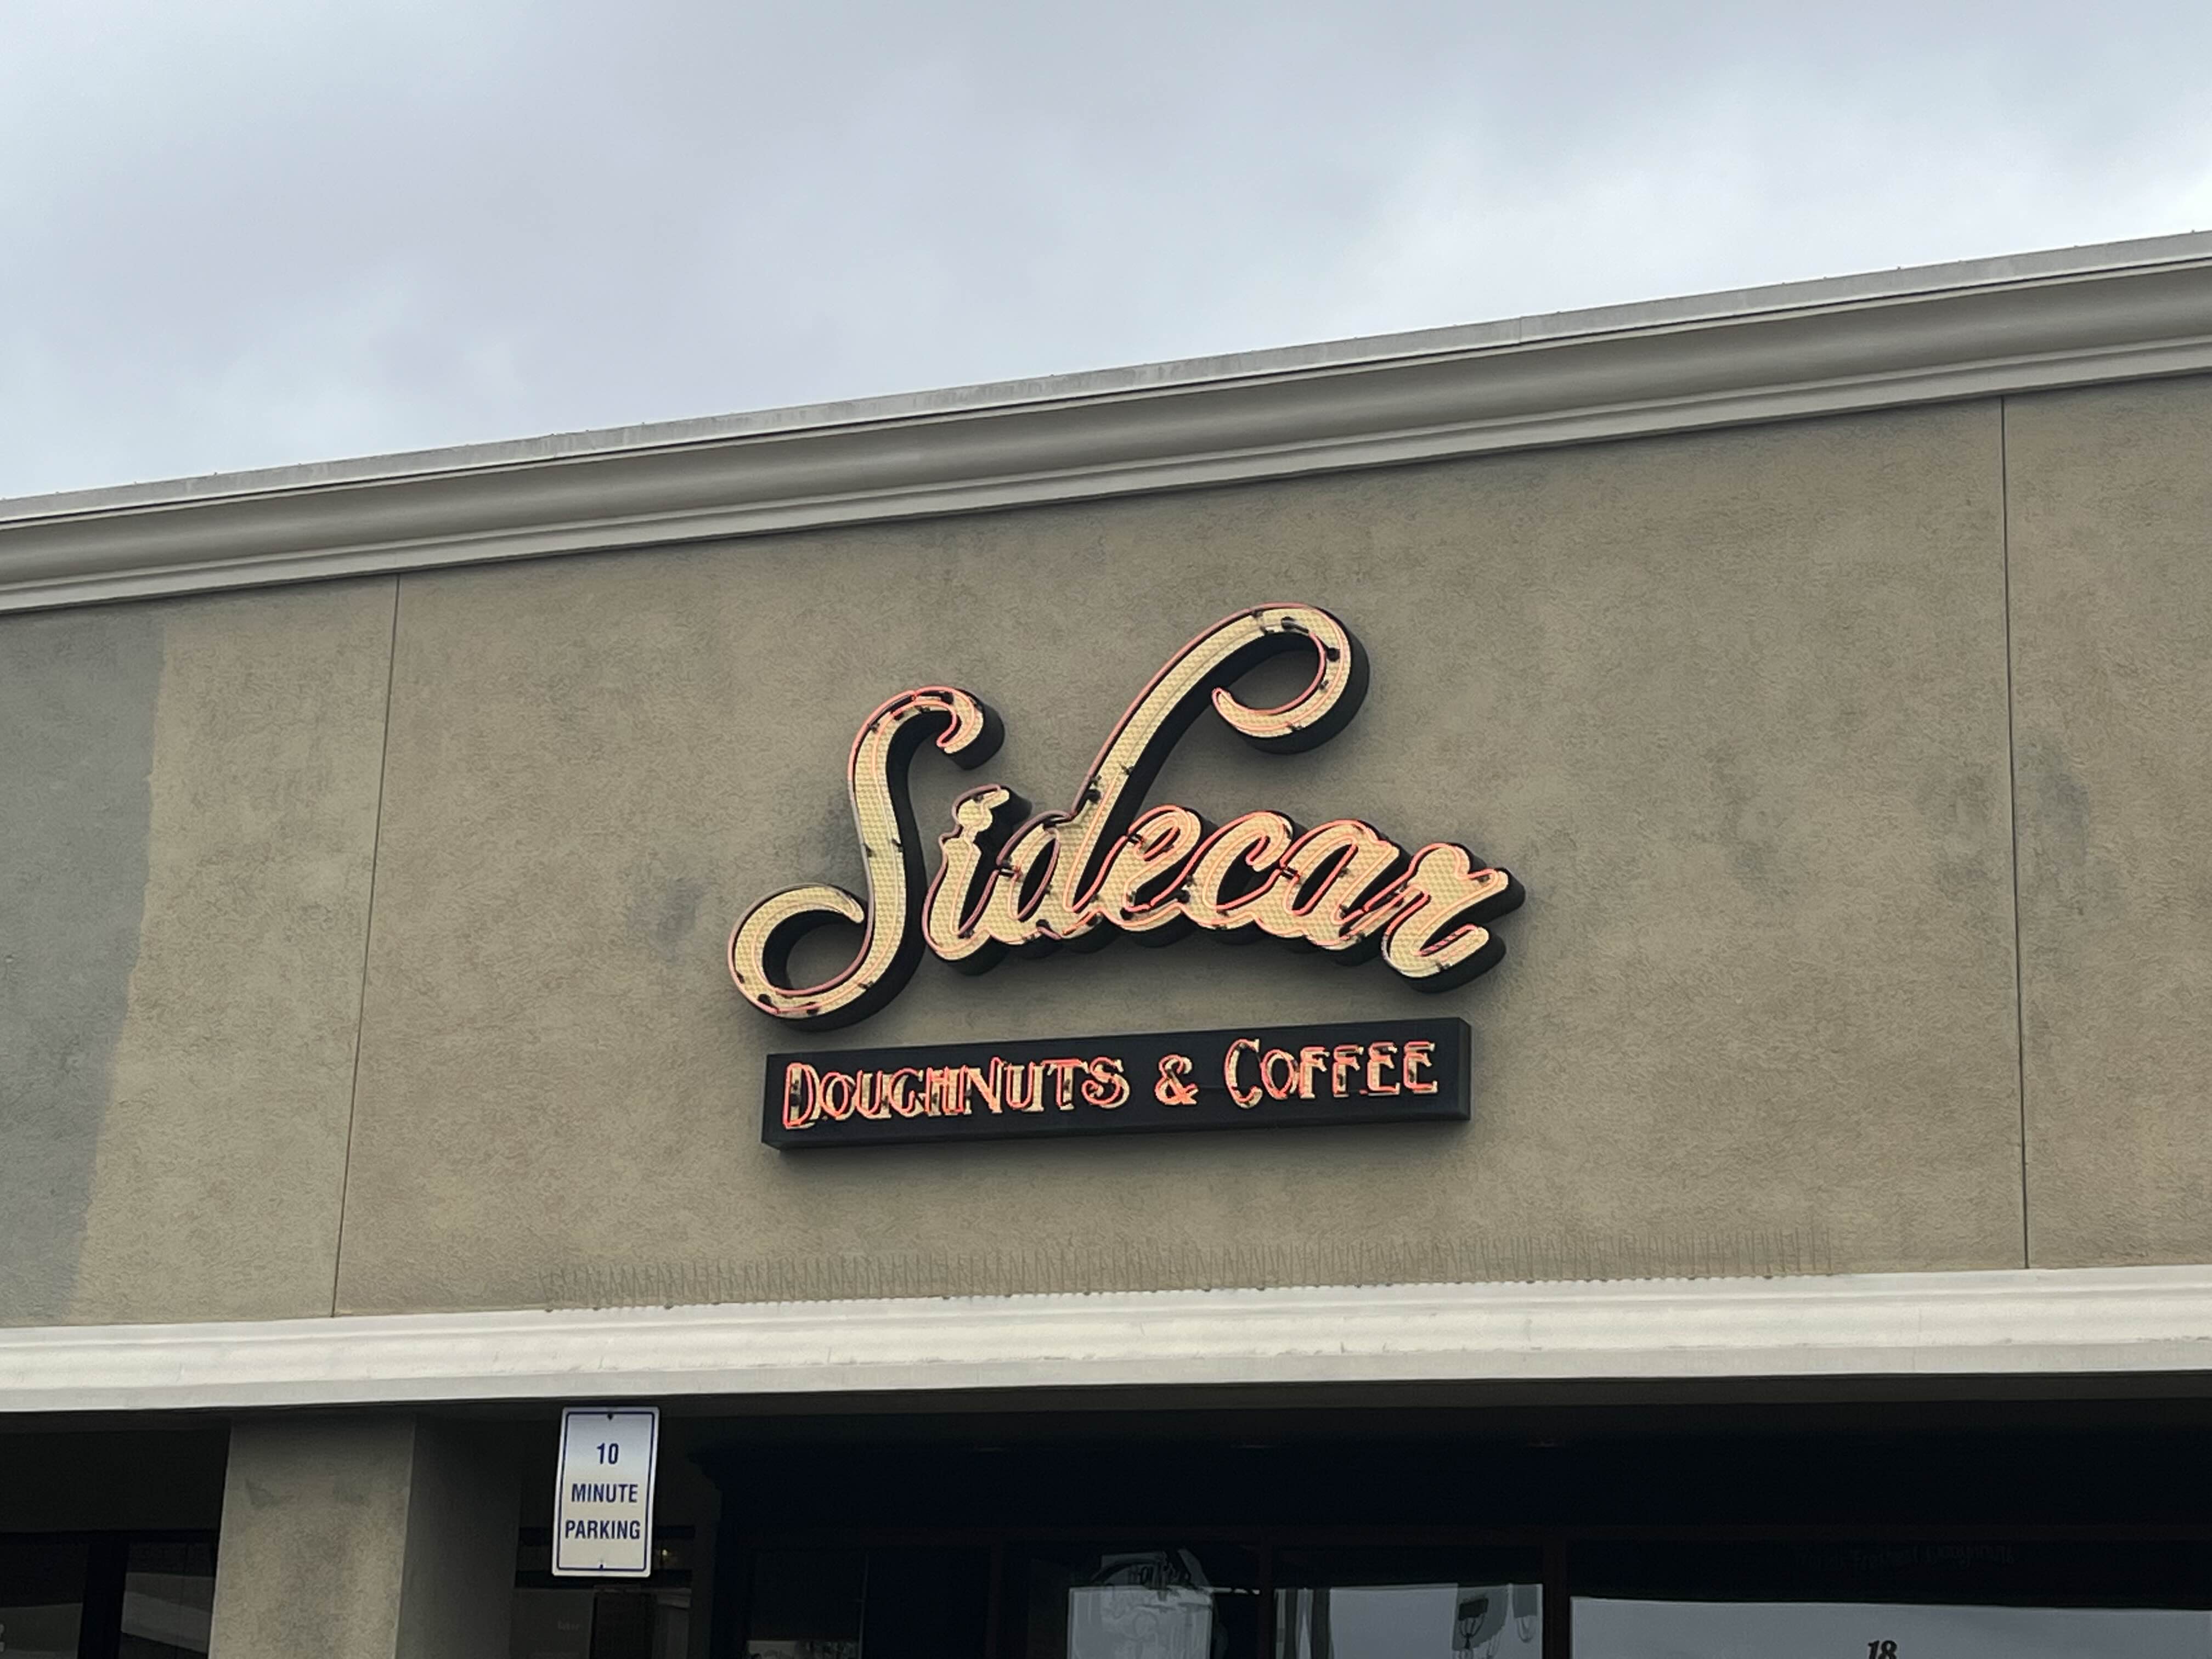 Sidecar donuts & coffee 로고 입니다.